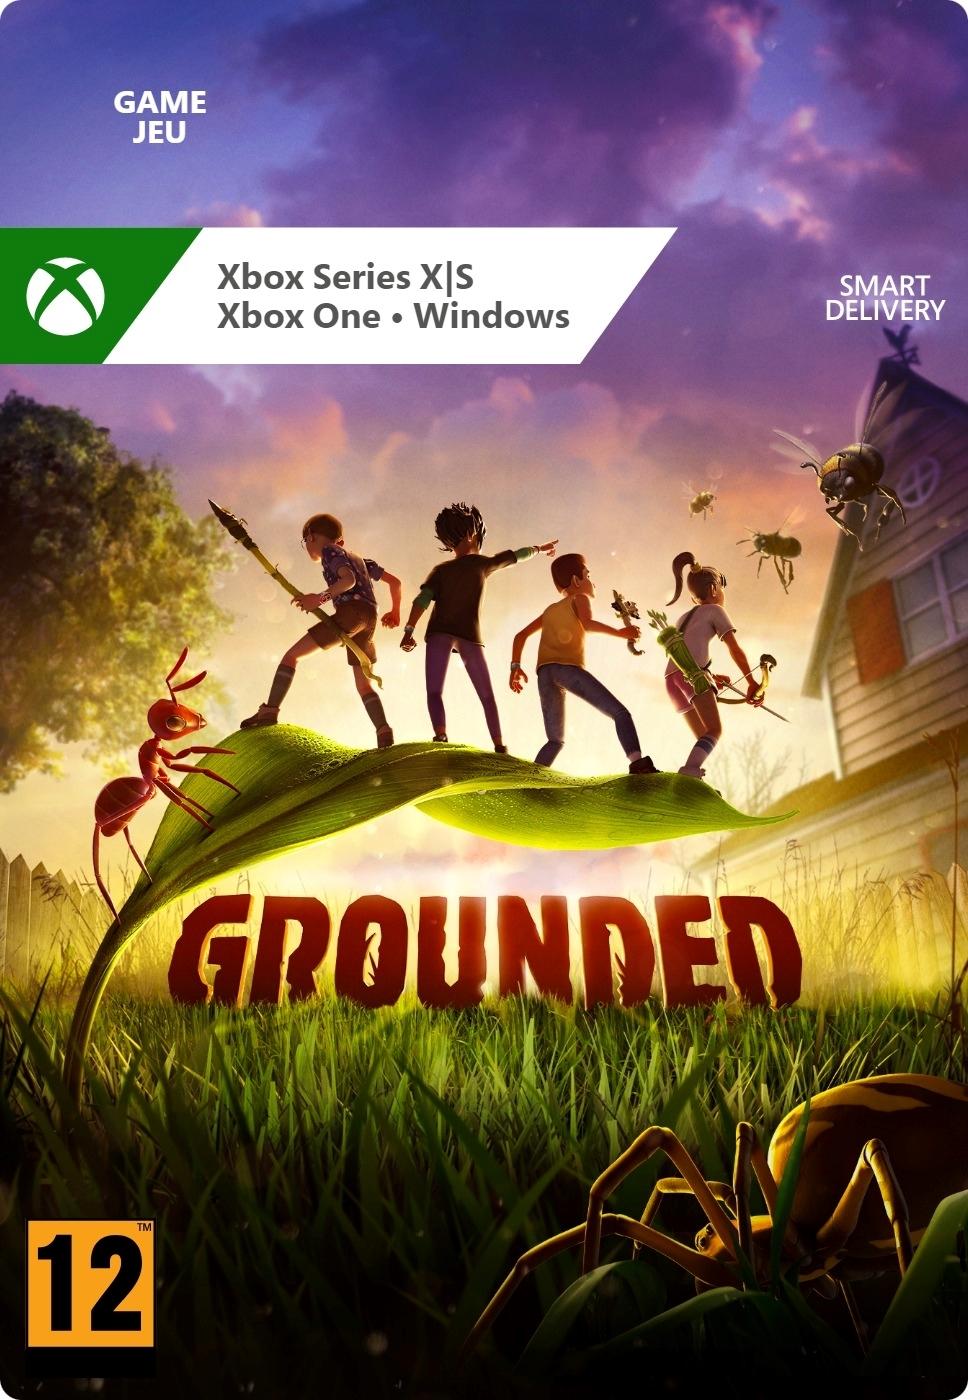 Grounded - Xbox Series X/Xbox One/Win10 - Game | G7Q-00129 (53343ba4-2d9d-fd46-8d87-9e8d34264e1b)